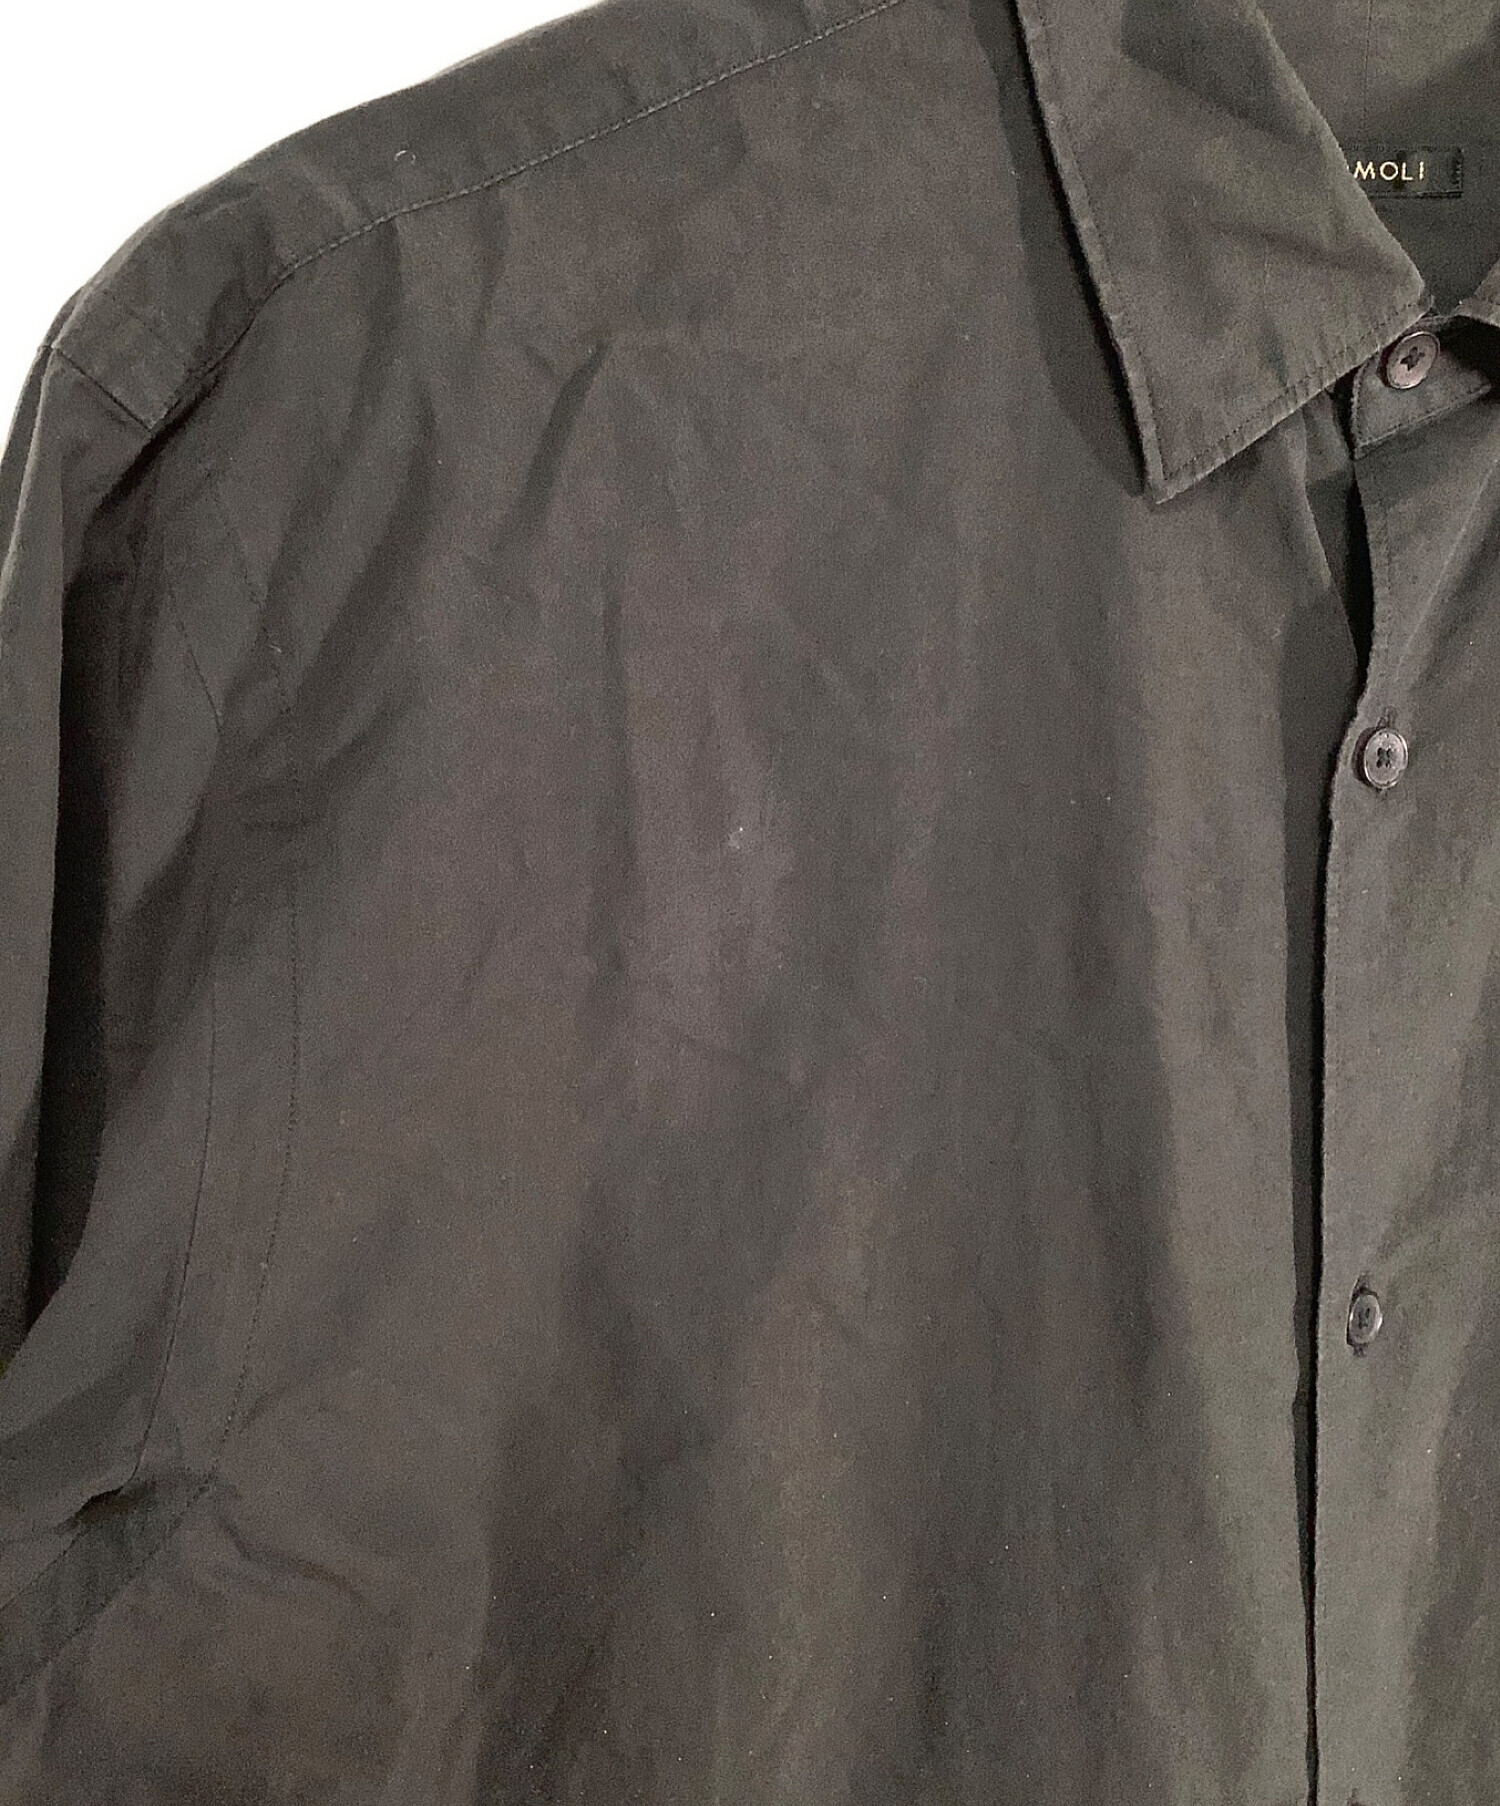 COMOLI (コモリ) コモリシャツ ブラック サイズ:2